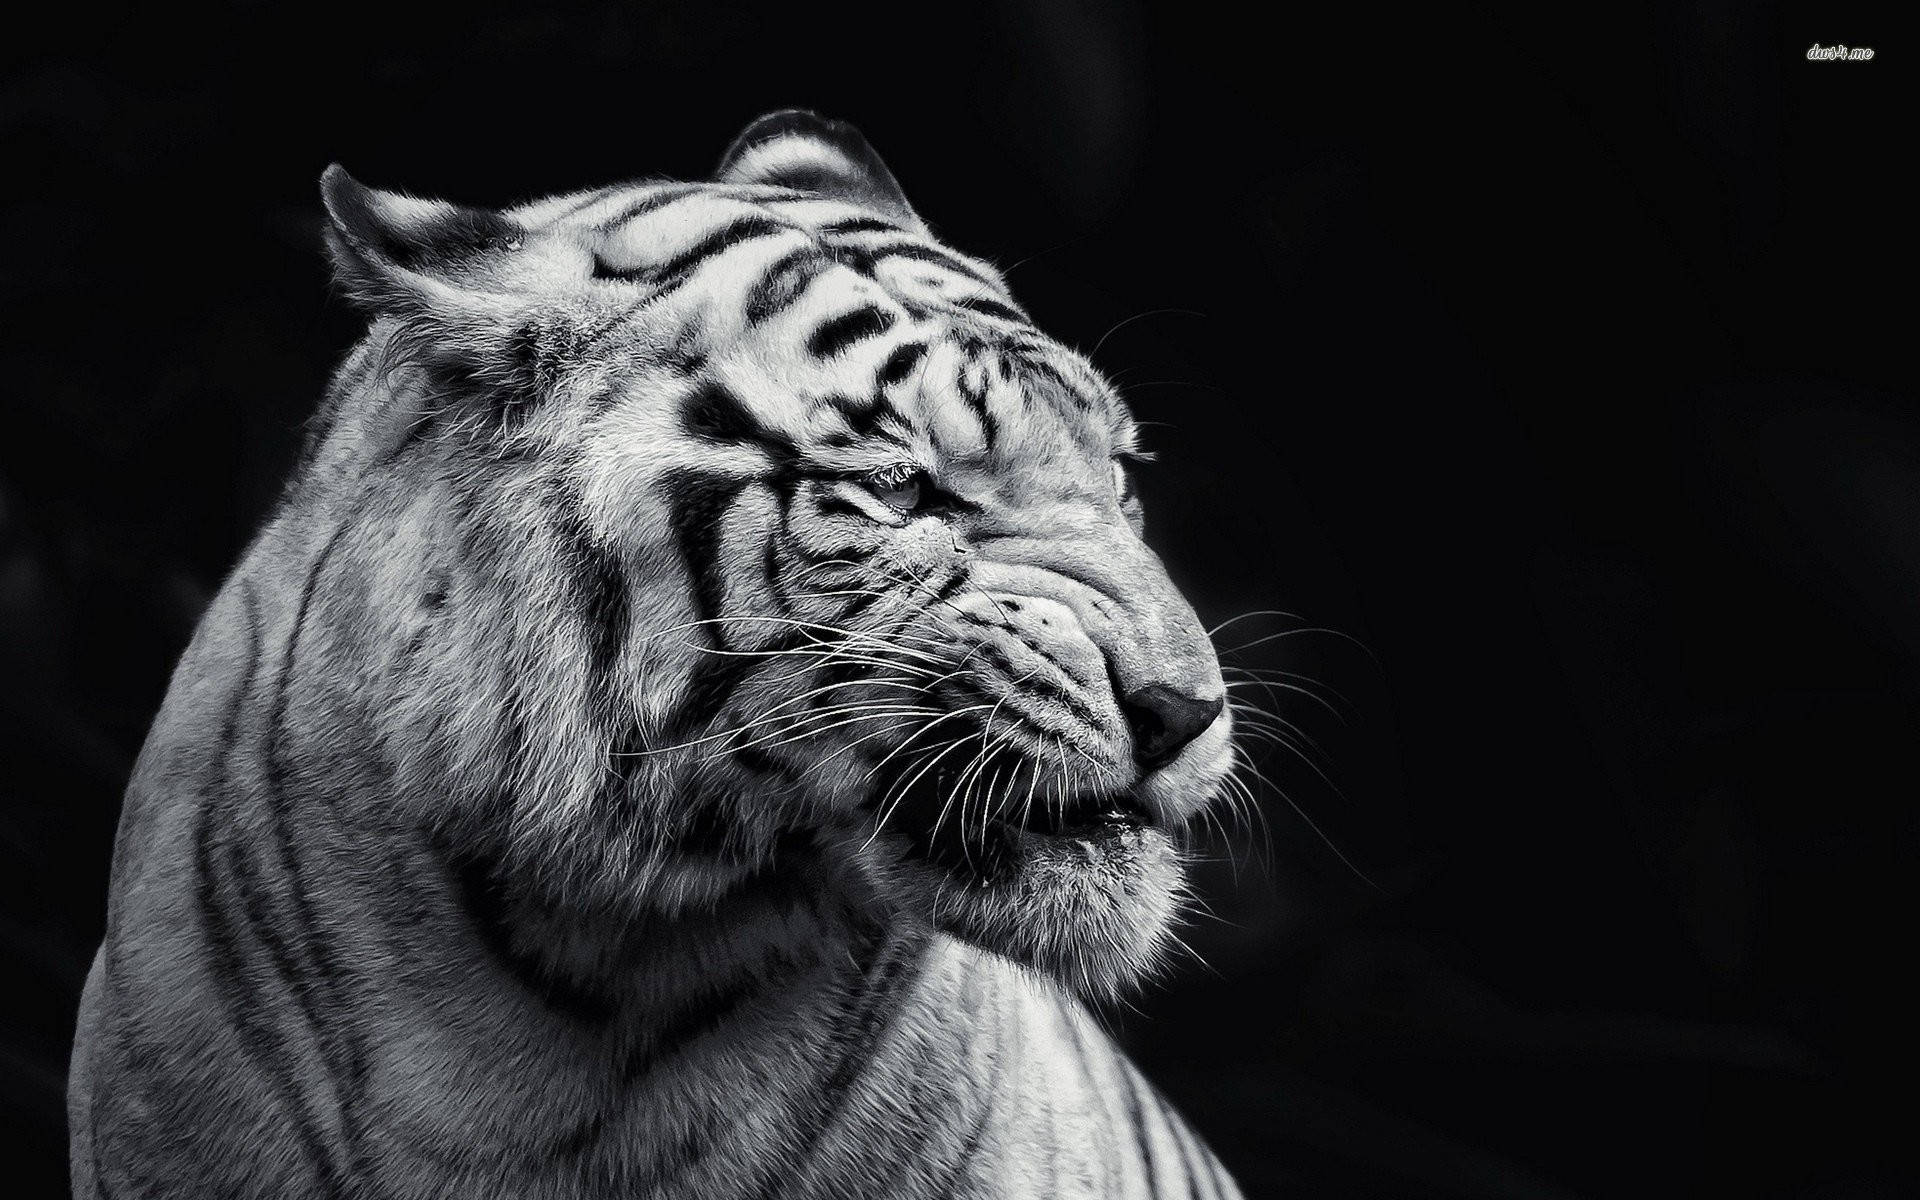 Captivating Tiger in Monochrome Wallpaper